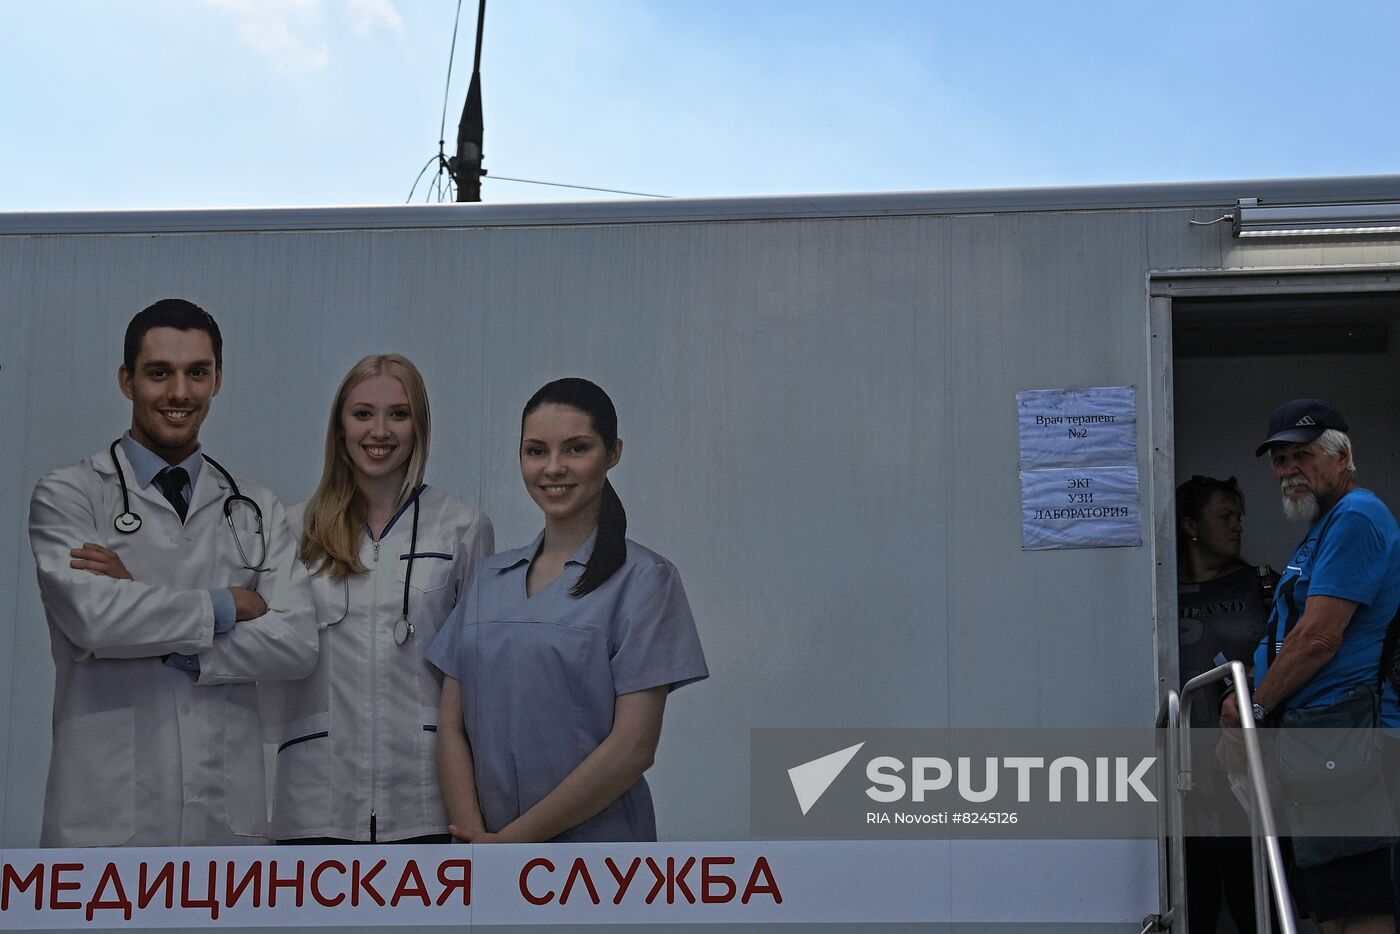 DPR Russia Ukraine Military Operation Mobile Clinic